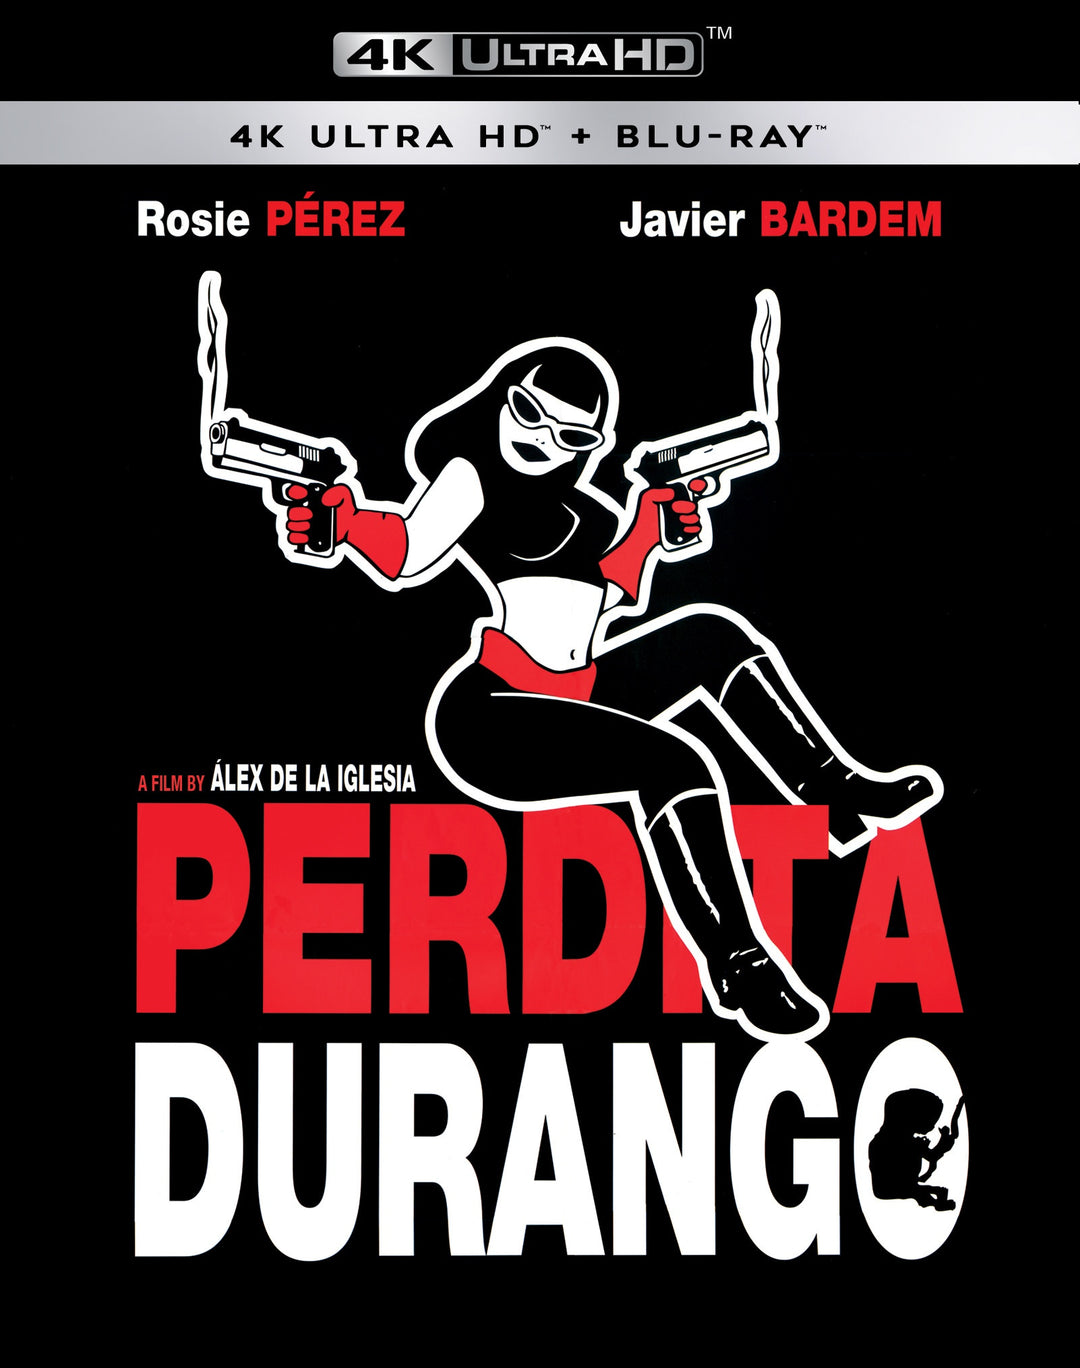 Perdita Durango [4K UHD w/Slipcover]